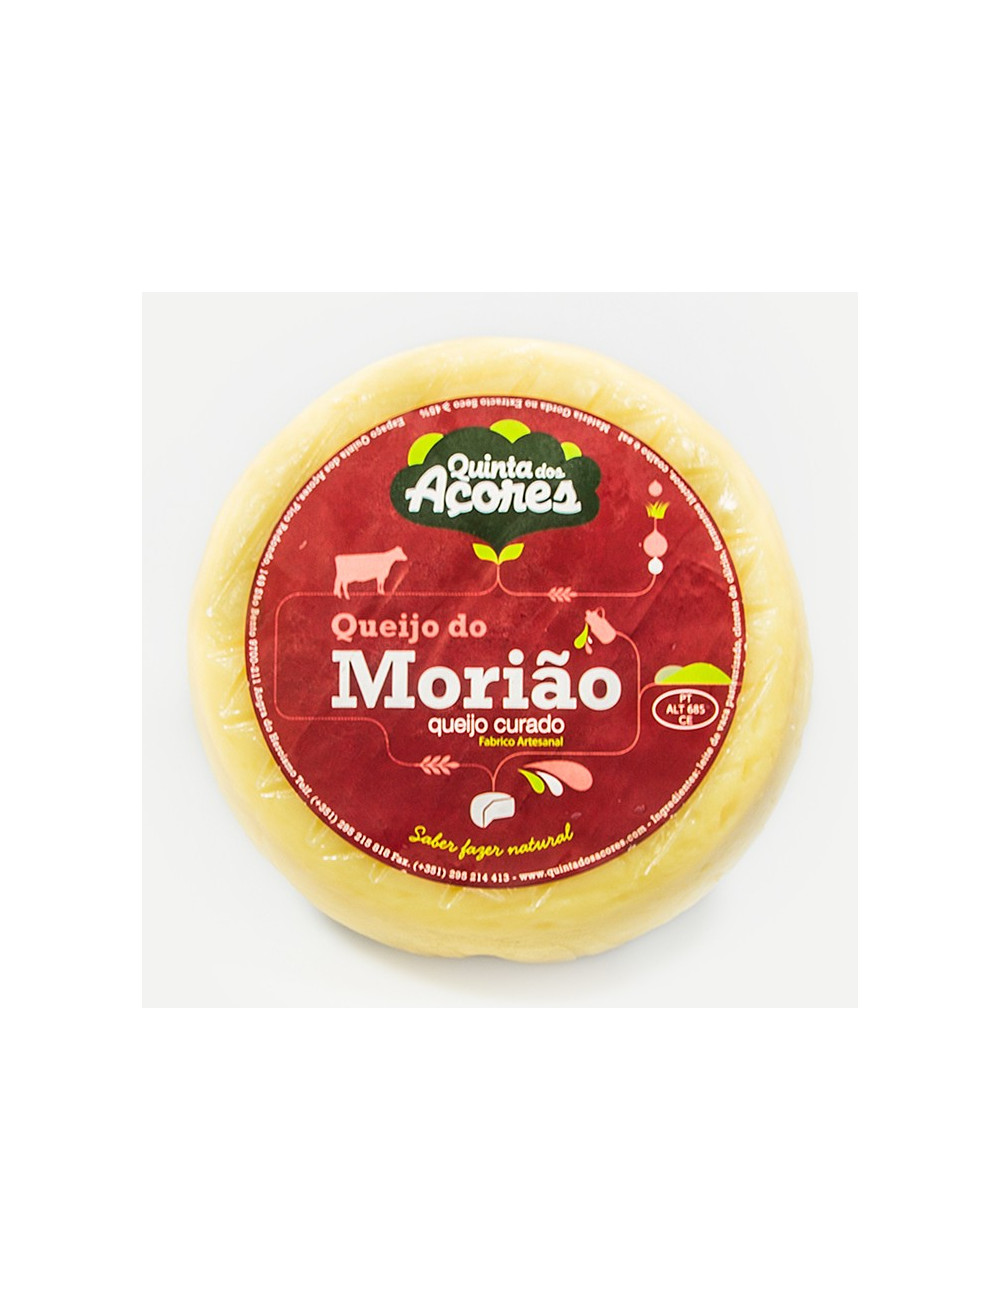 Morião Cheese